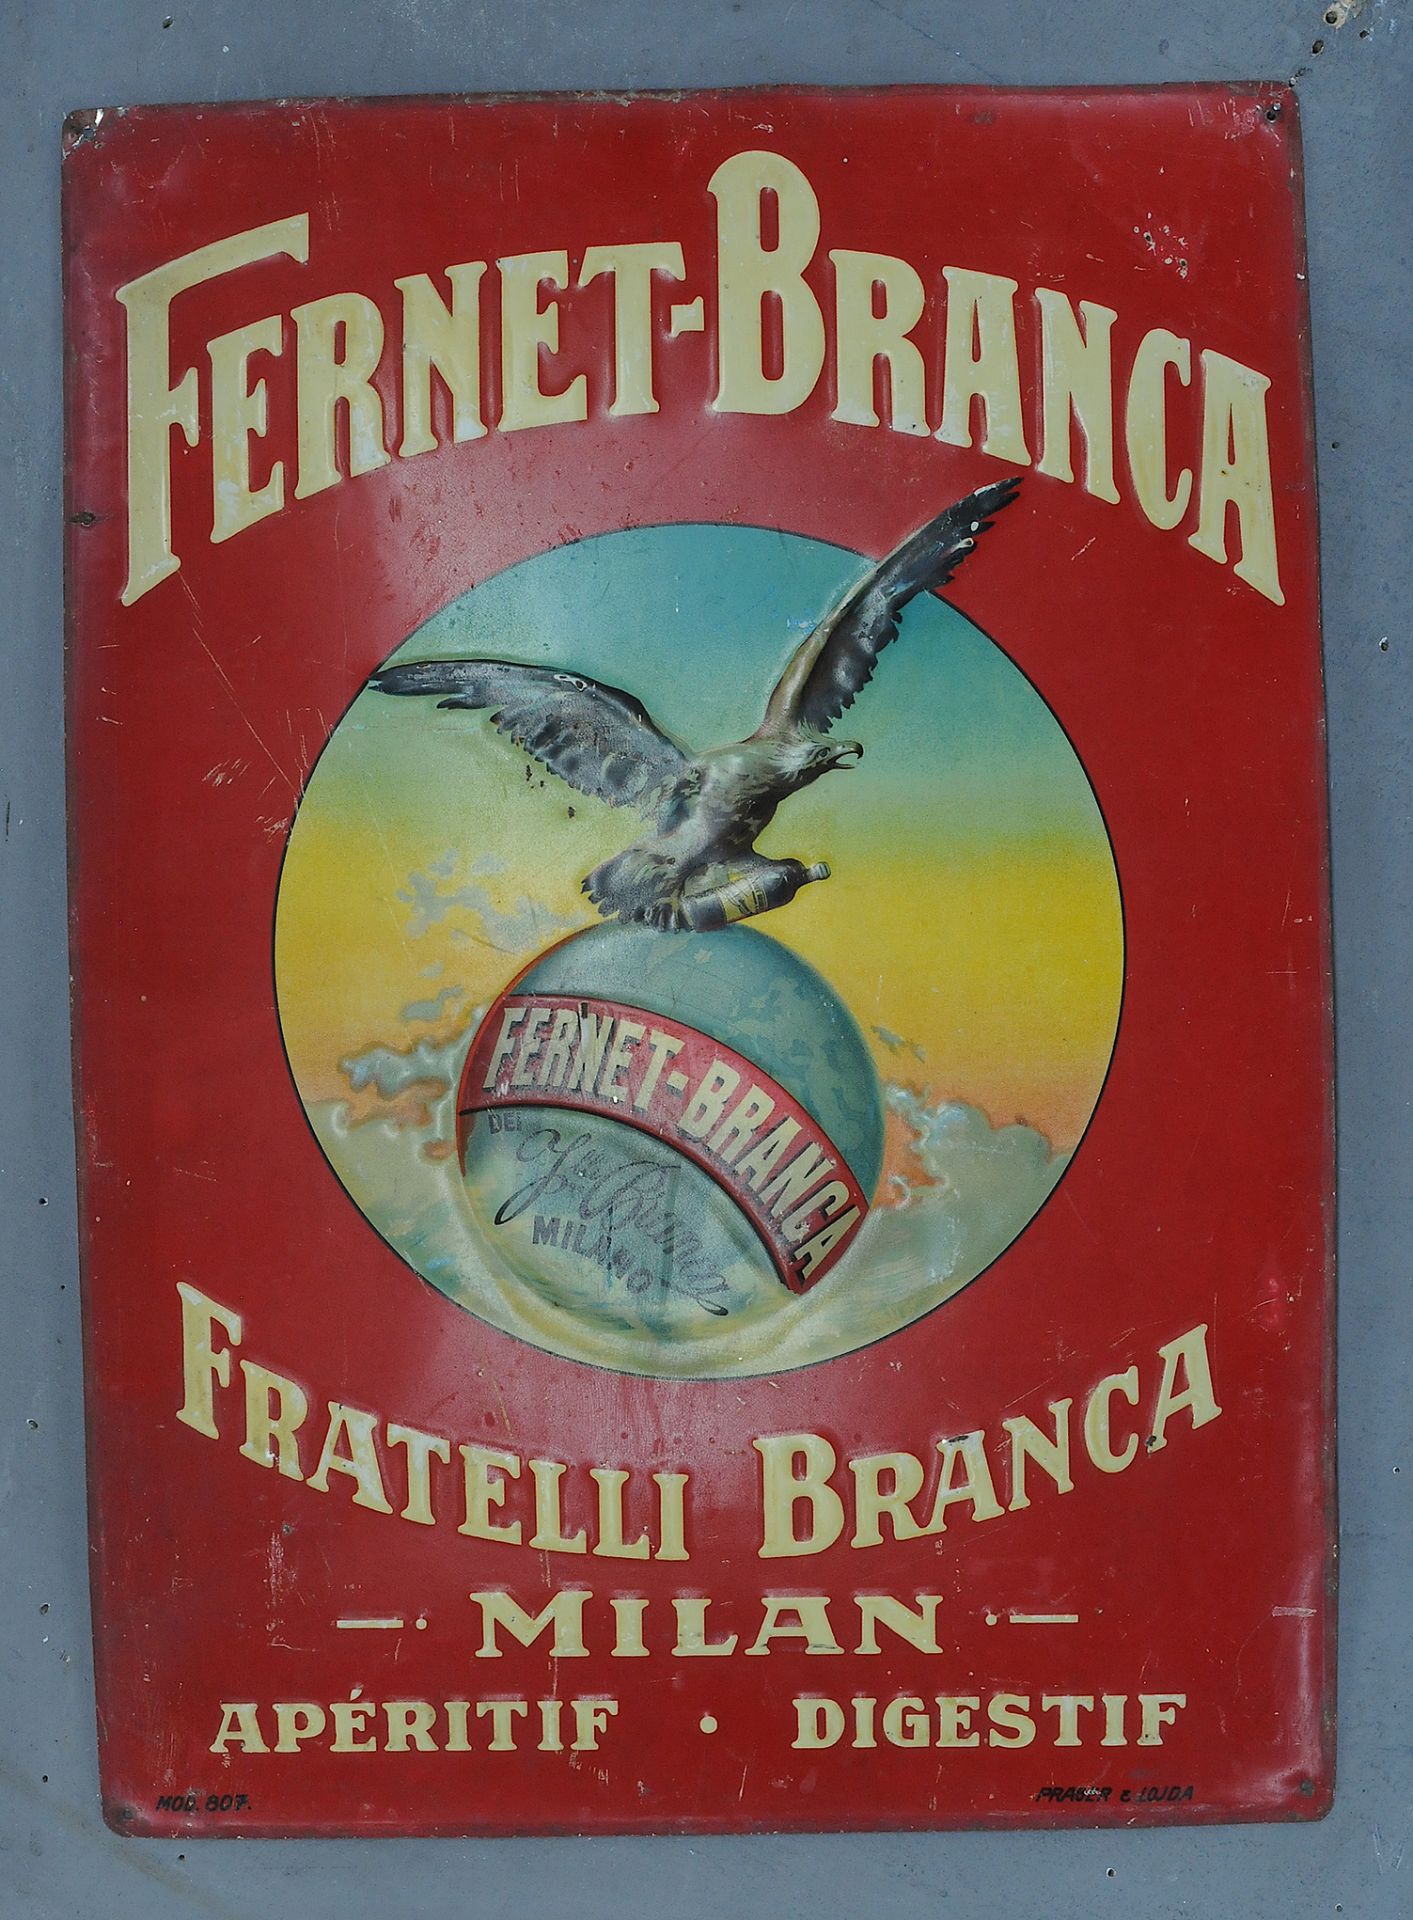 Fernet-Branca Fratelli Branca - Image 3 of 3